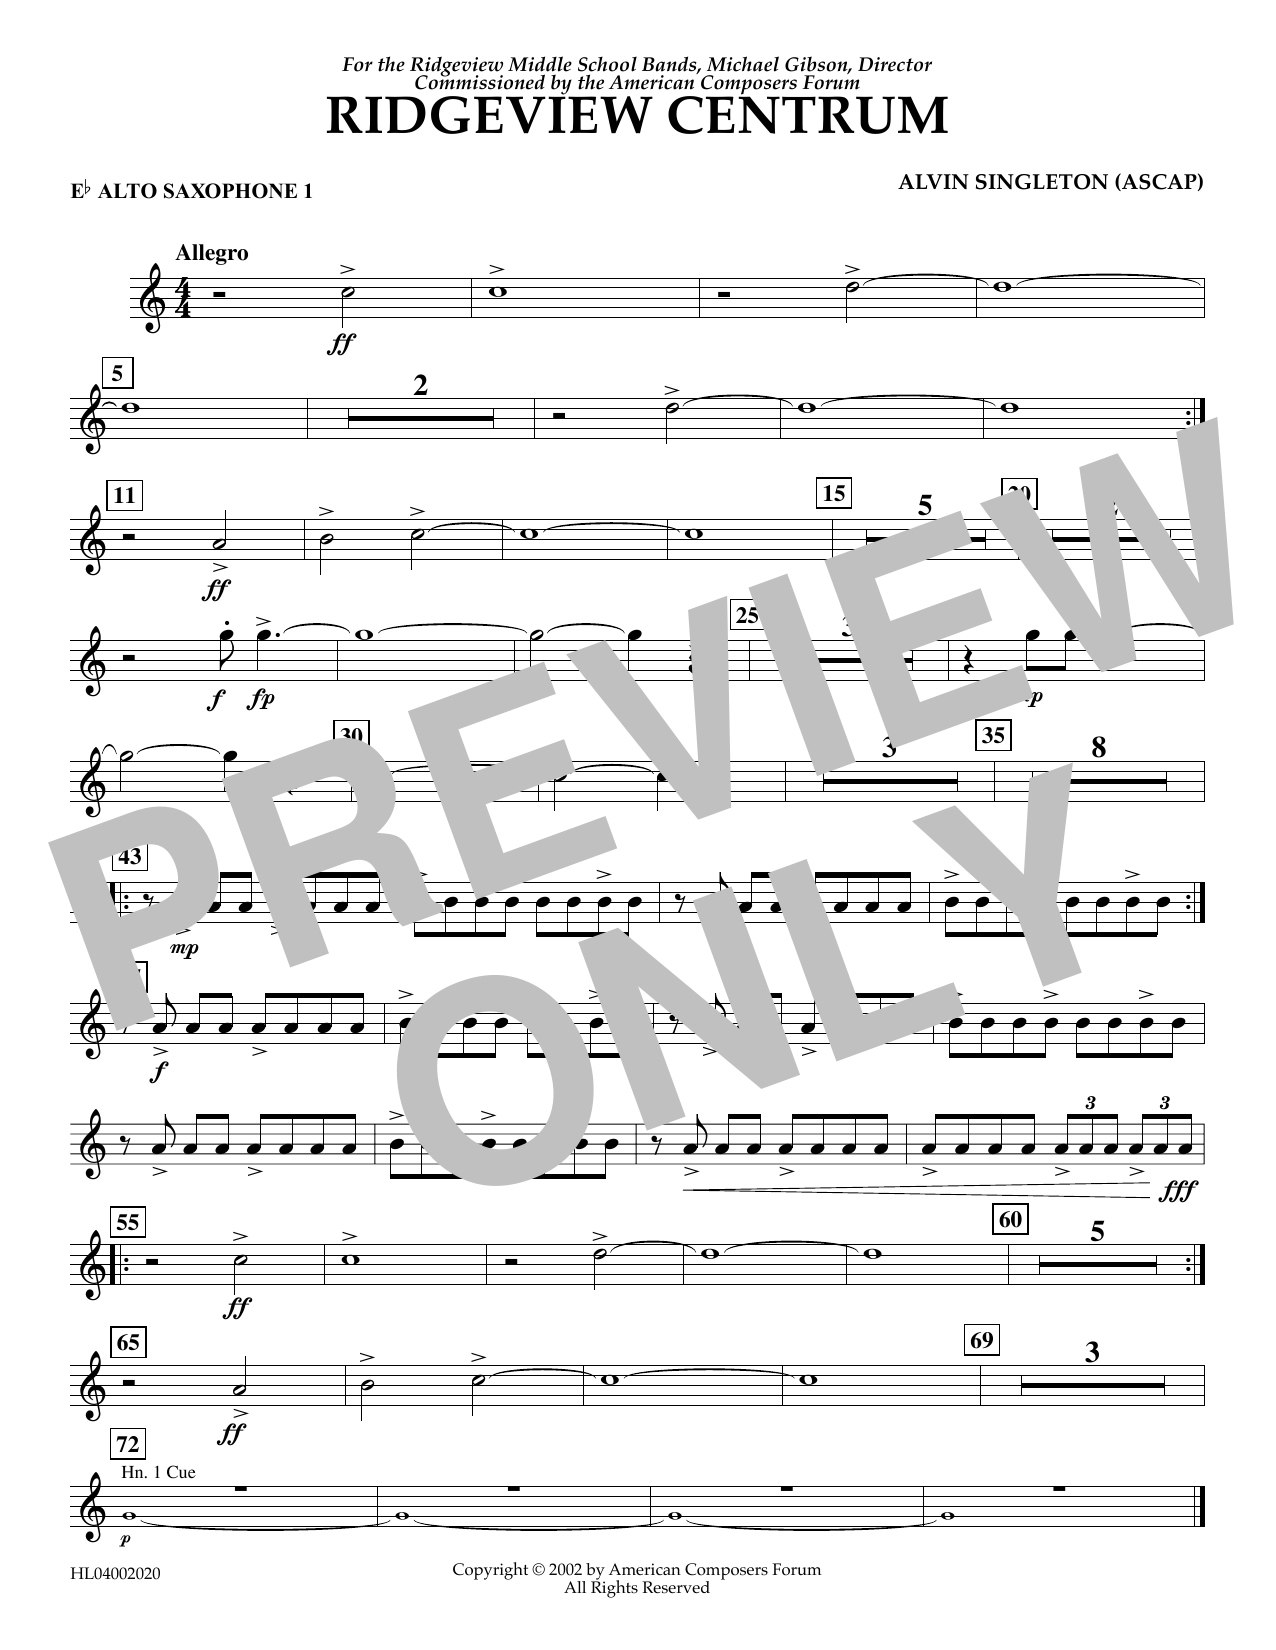 Alvin Singleton Ridgeview Centrum - Eb Alto Sax 1 Sheet Music Notes & Chords for Concert Band - Download or Print PDF